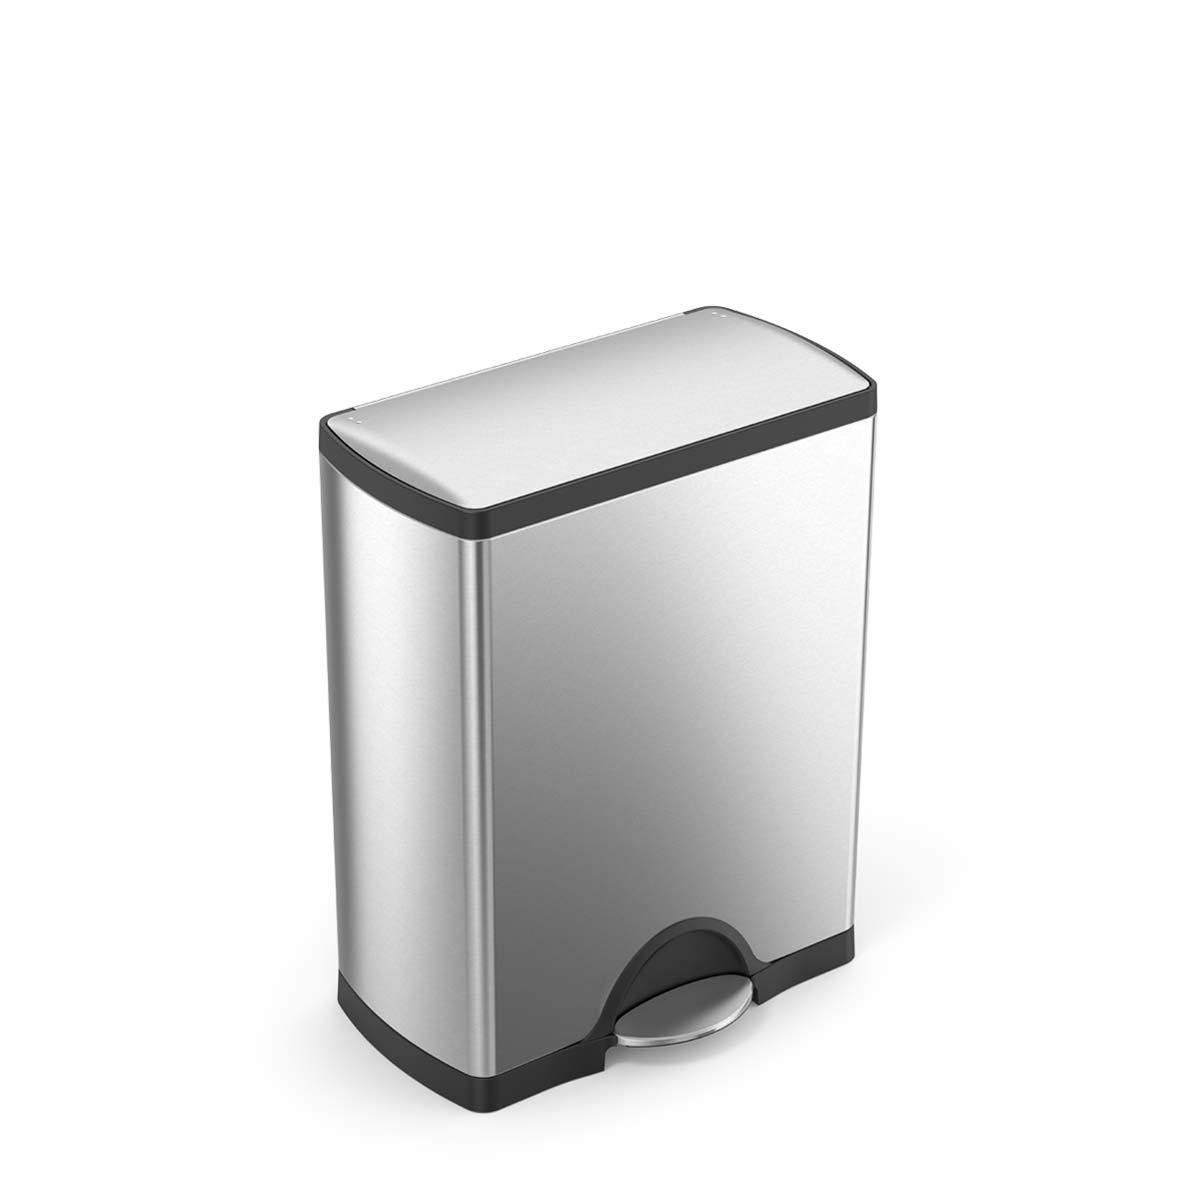 simplehuman 50 litre, classic rectangular pedal bin, black steel